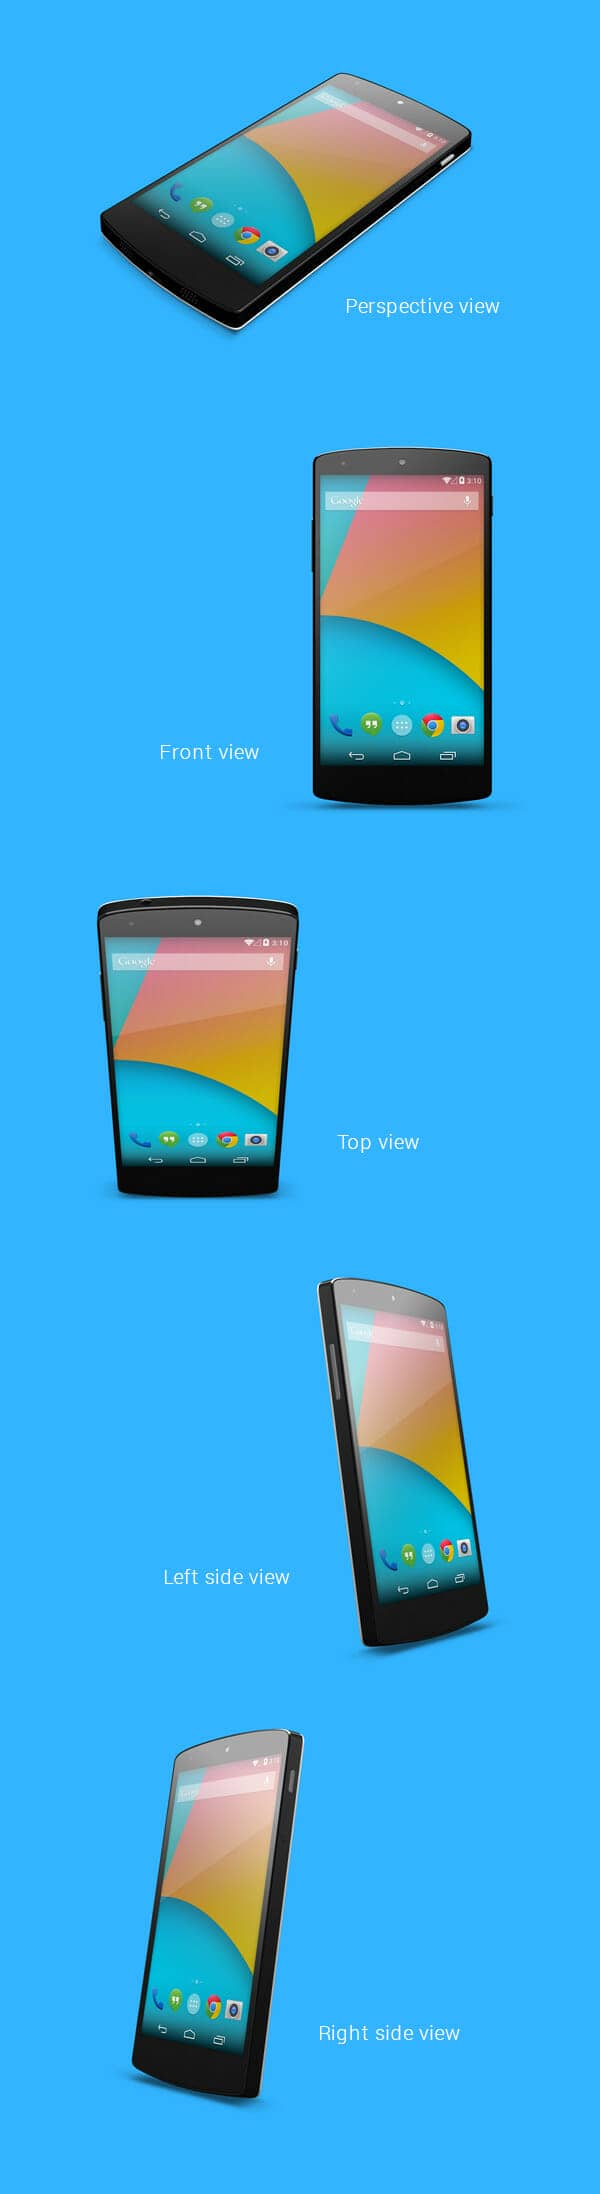 Android Nexus 5 Mockup